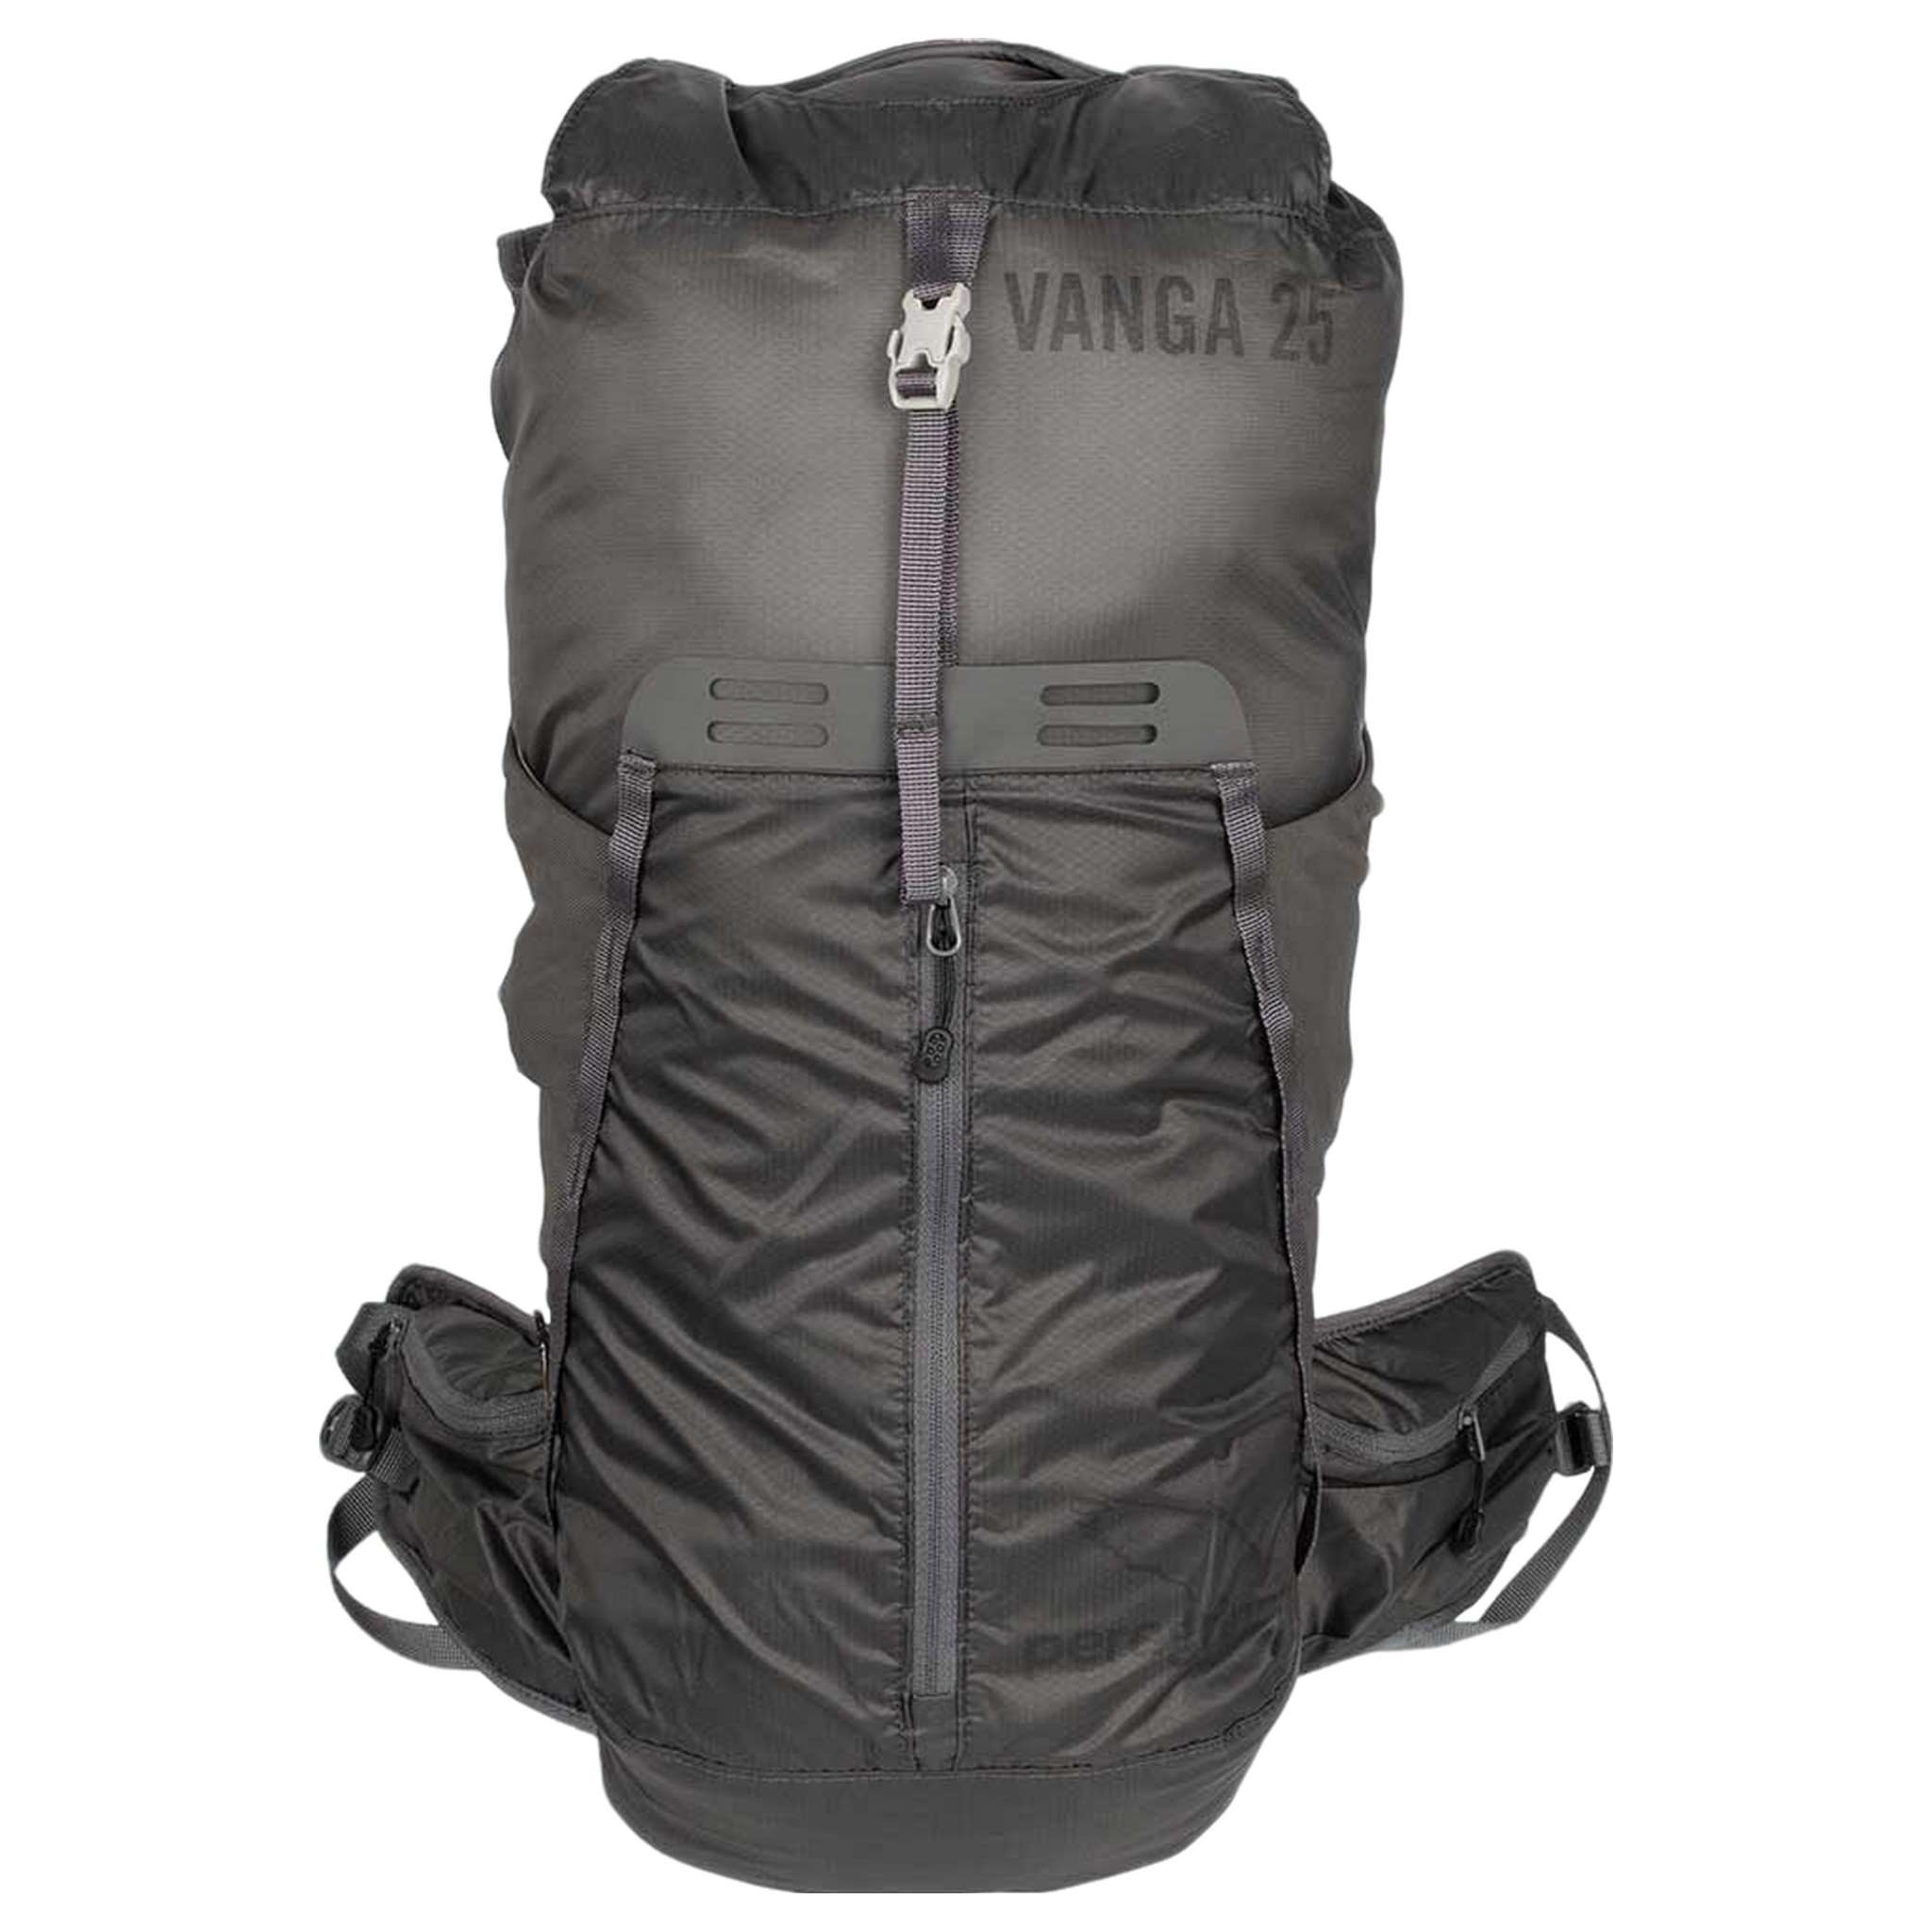 Vanga 25 UL Dry Backpack - Lightweight, Waterproof Daypack for Hiking and Trail Running